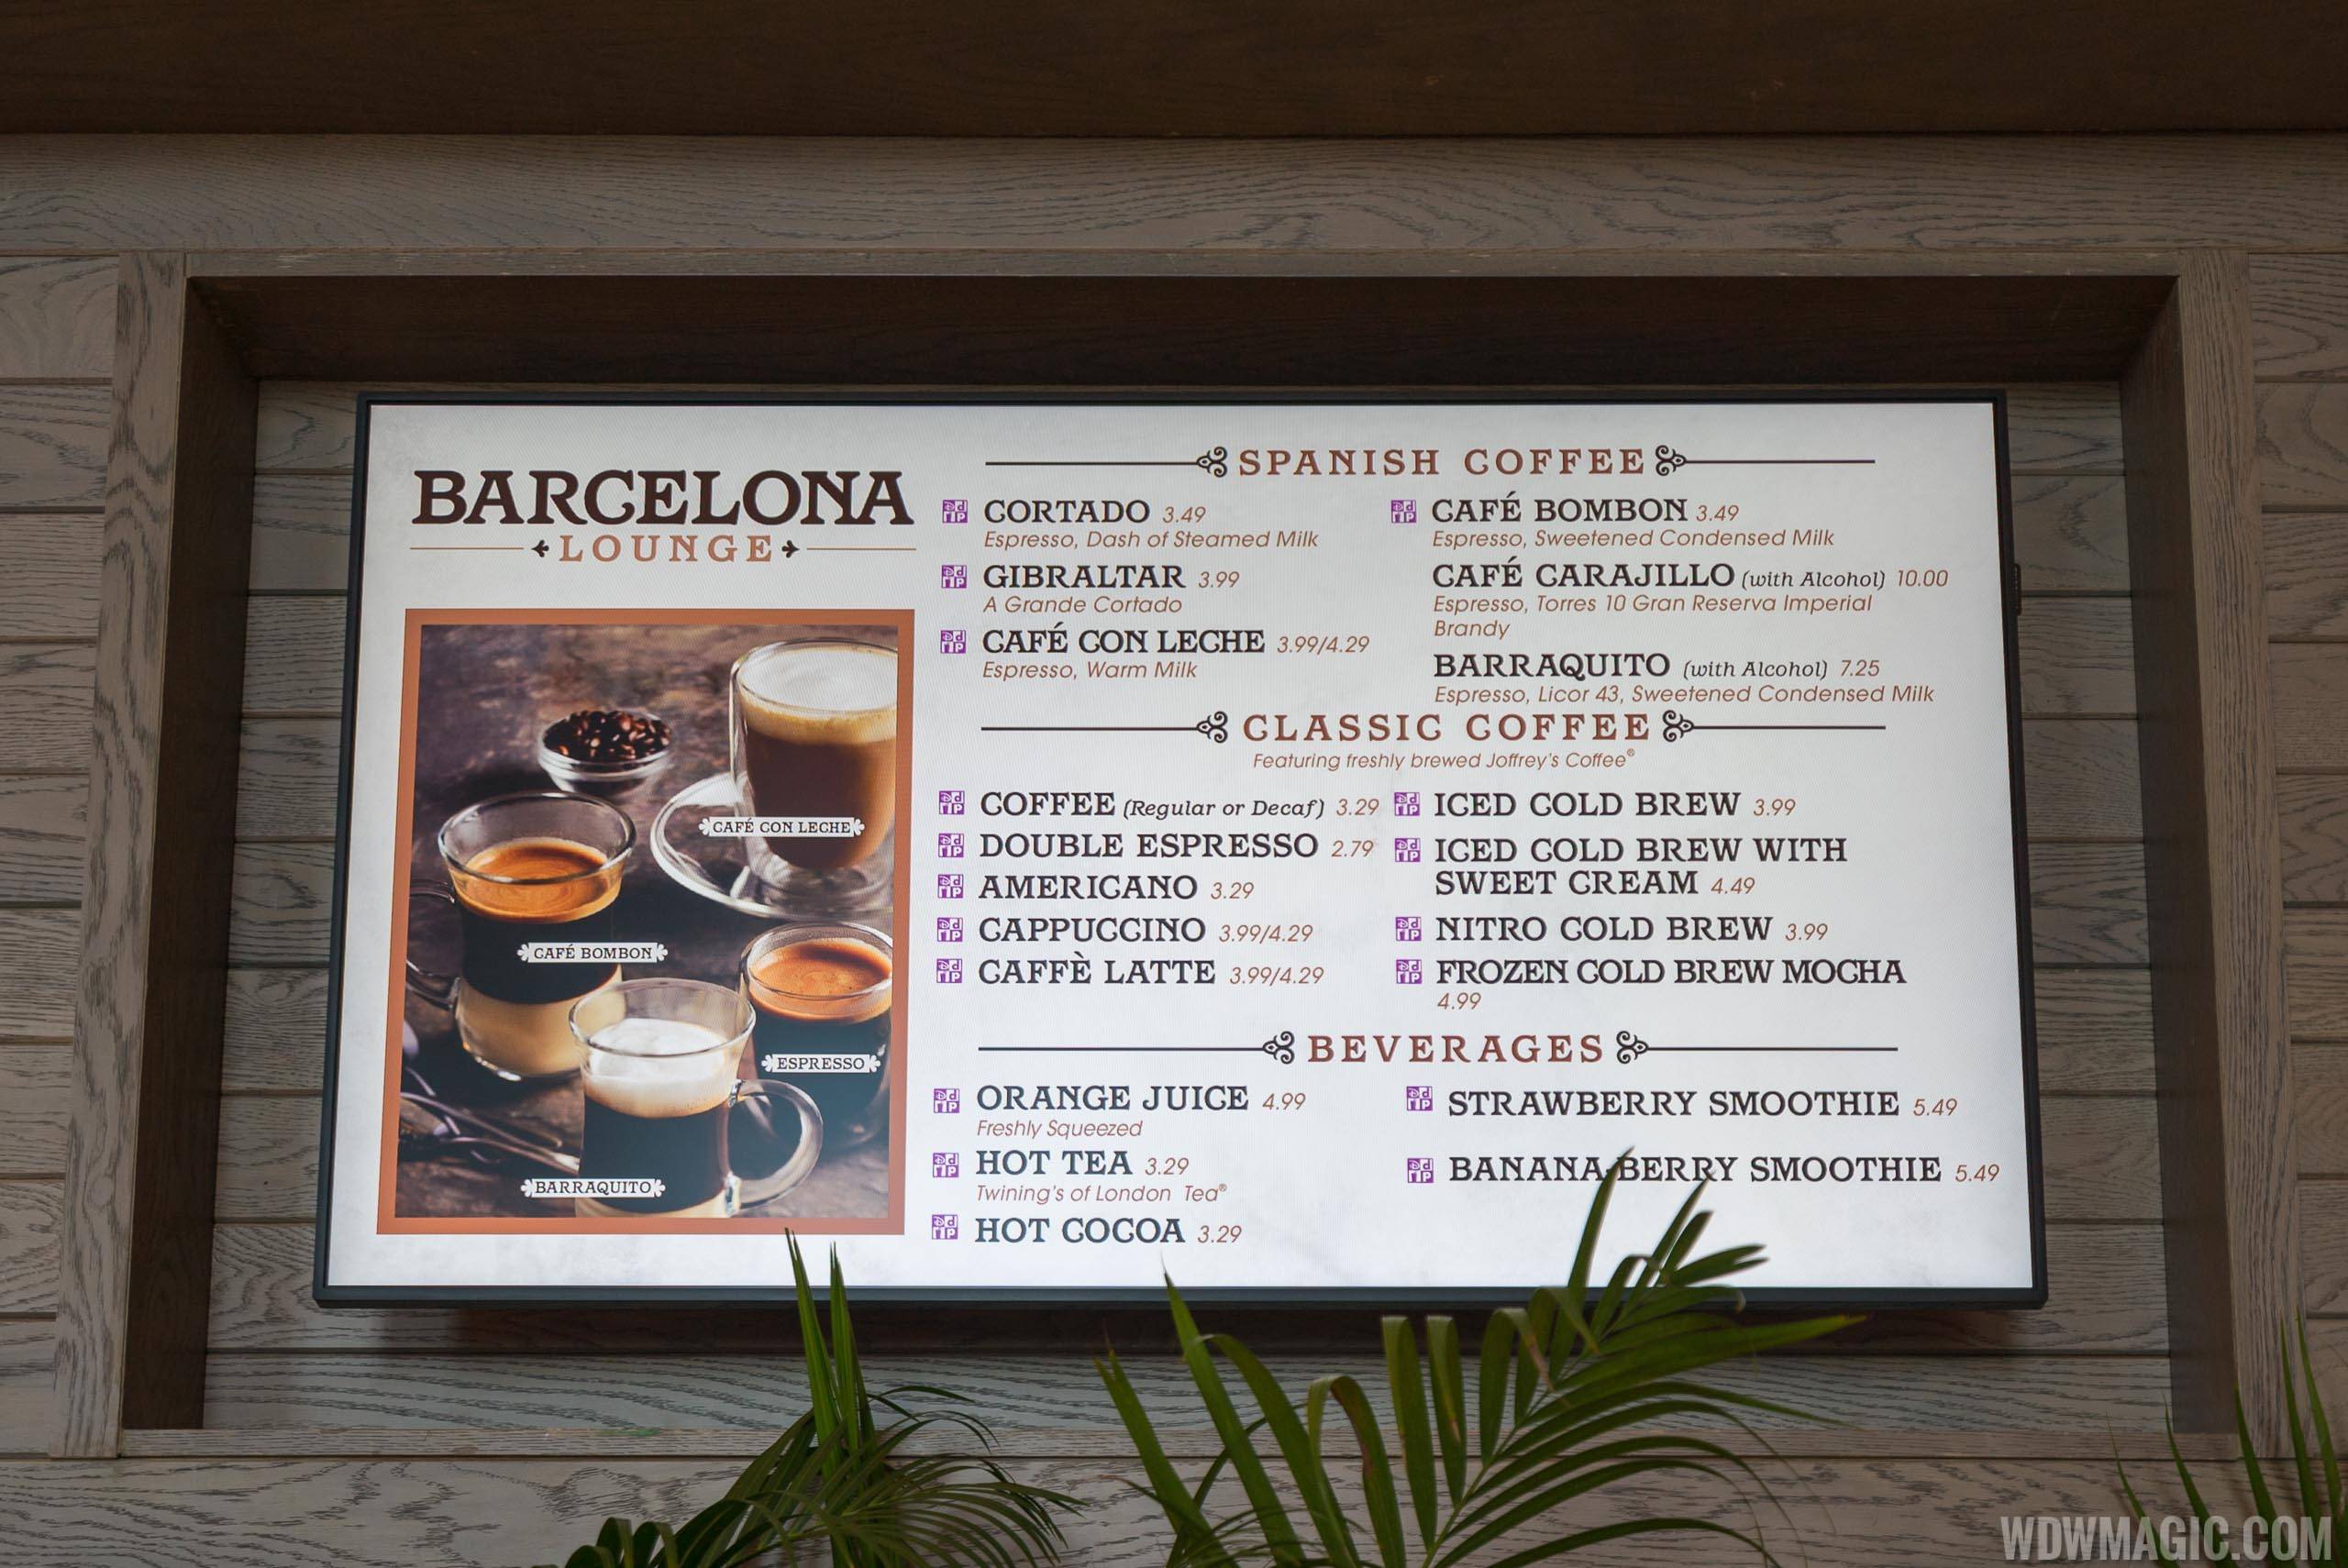 Barcelona Lounge morning coffee menu